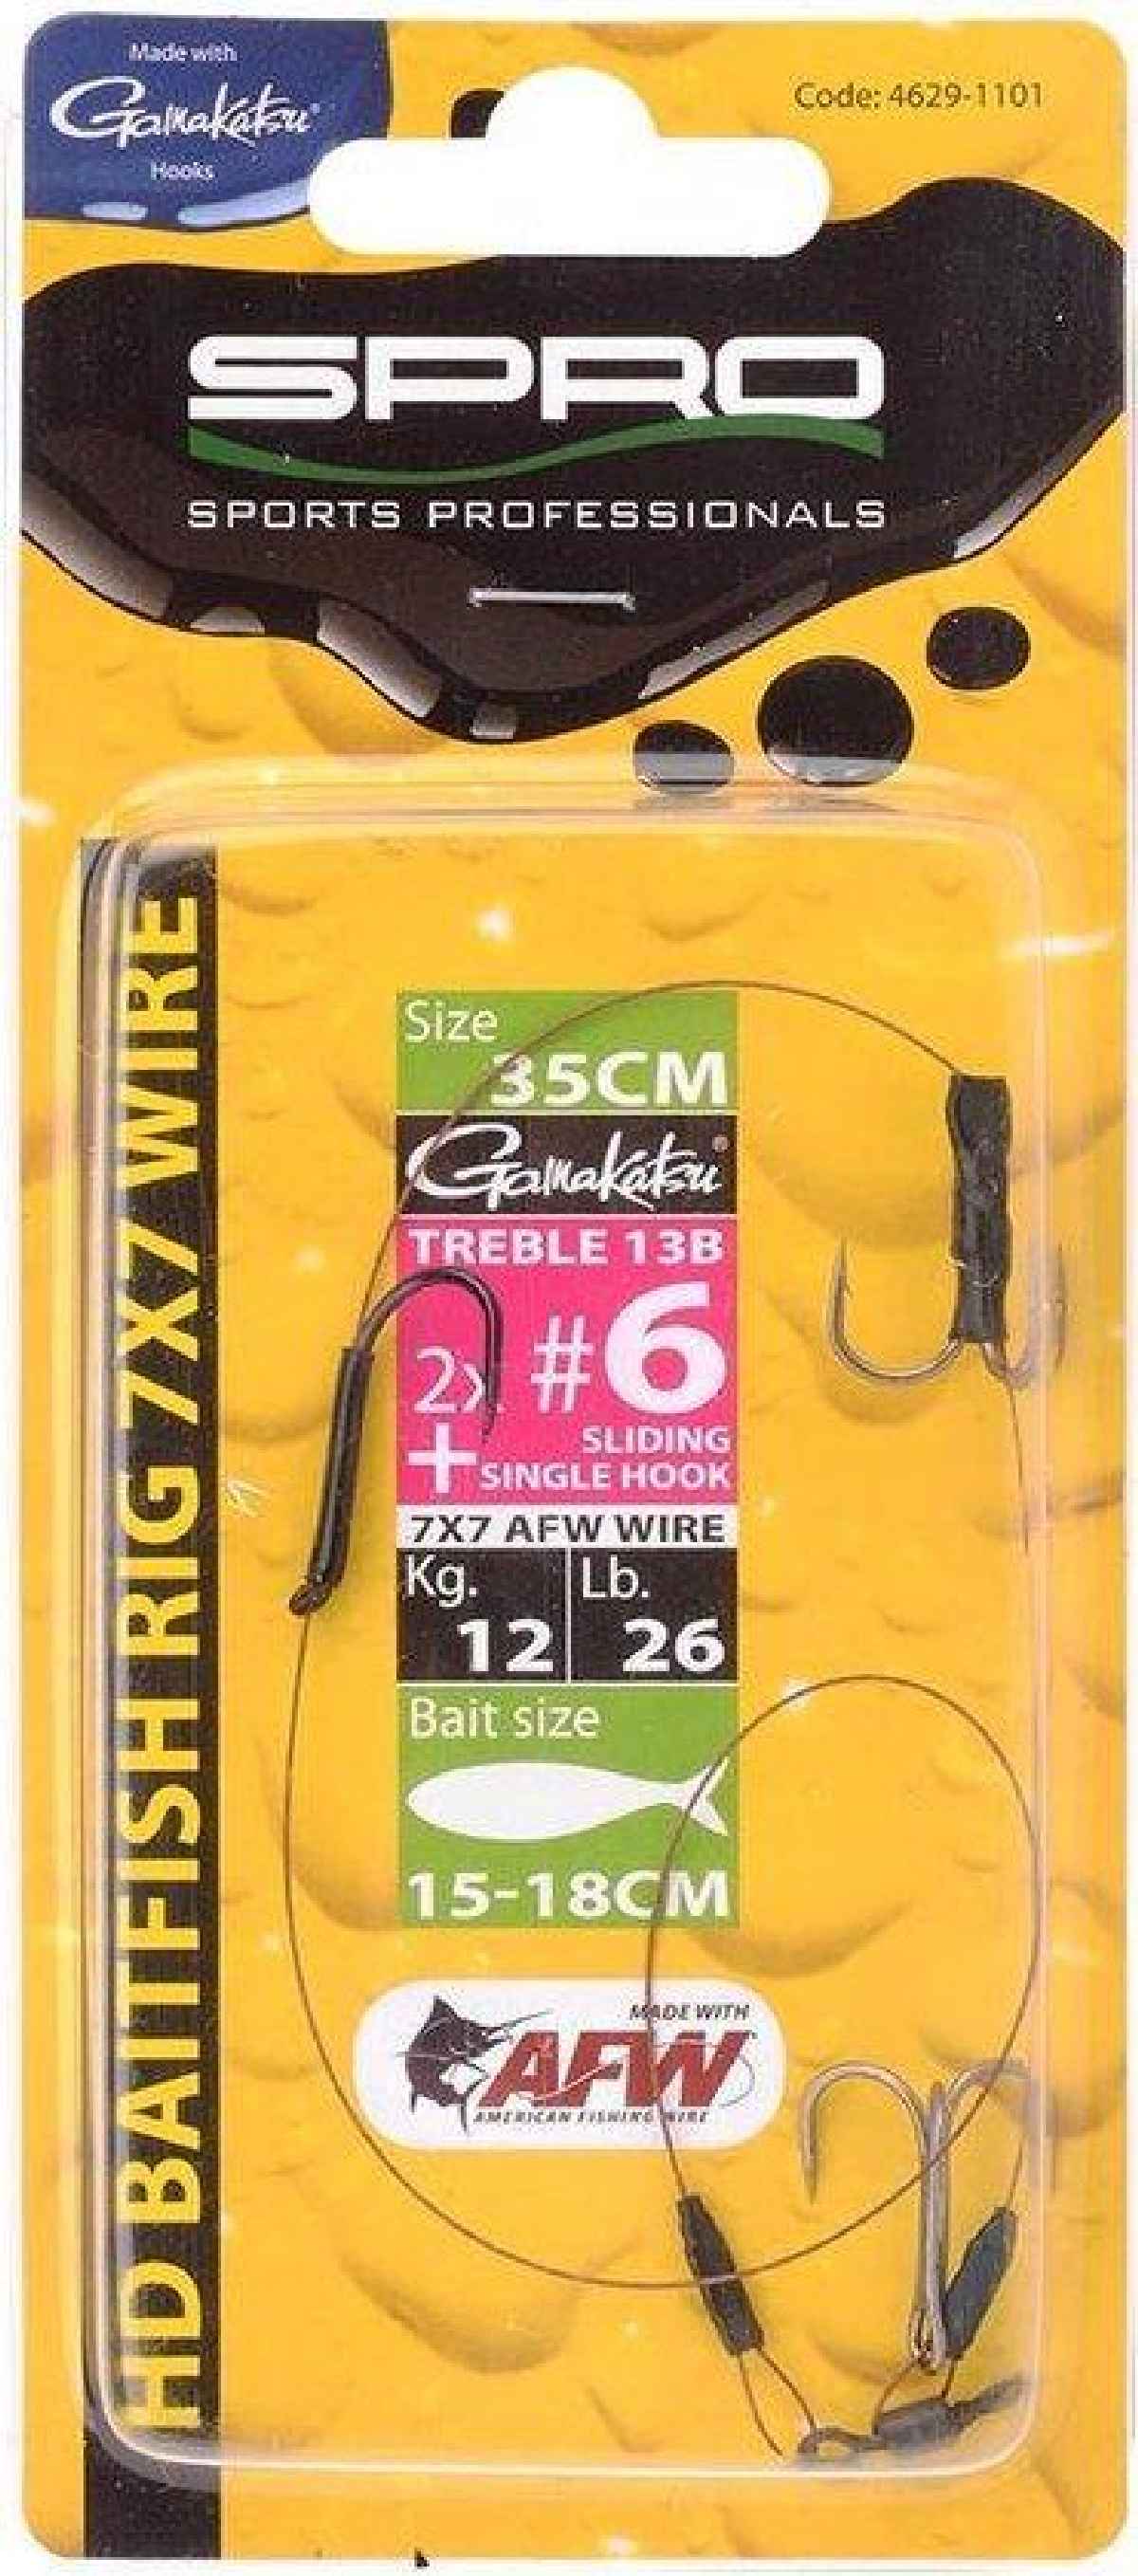 Spro Hd Baitfish Rig 2X Treble 1X Single Hook 18Kg 45cm 2x Treble Size 2 + Singlehook